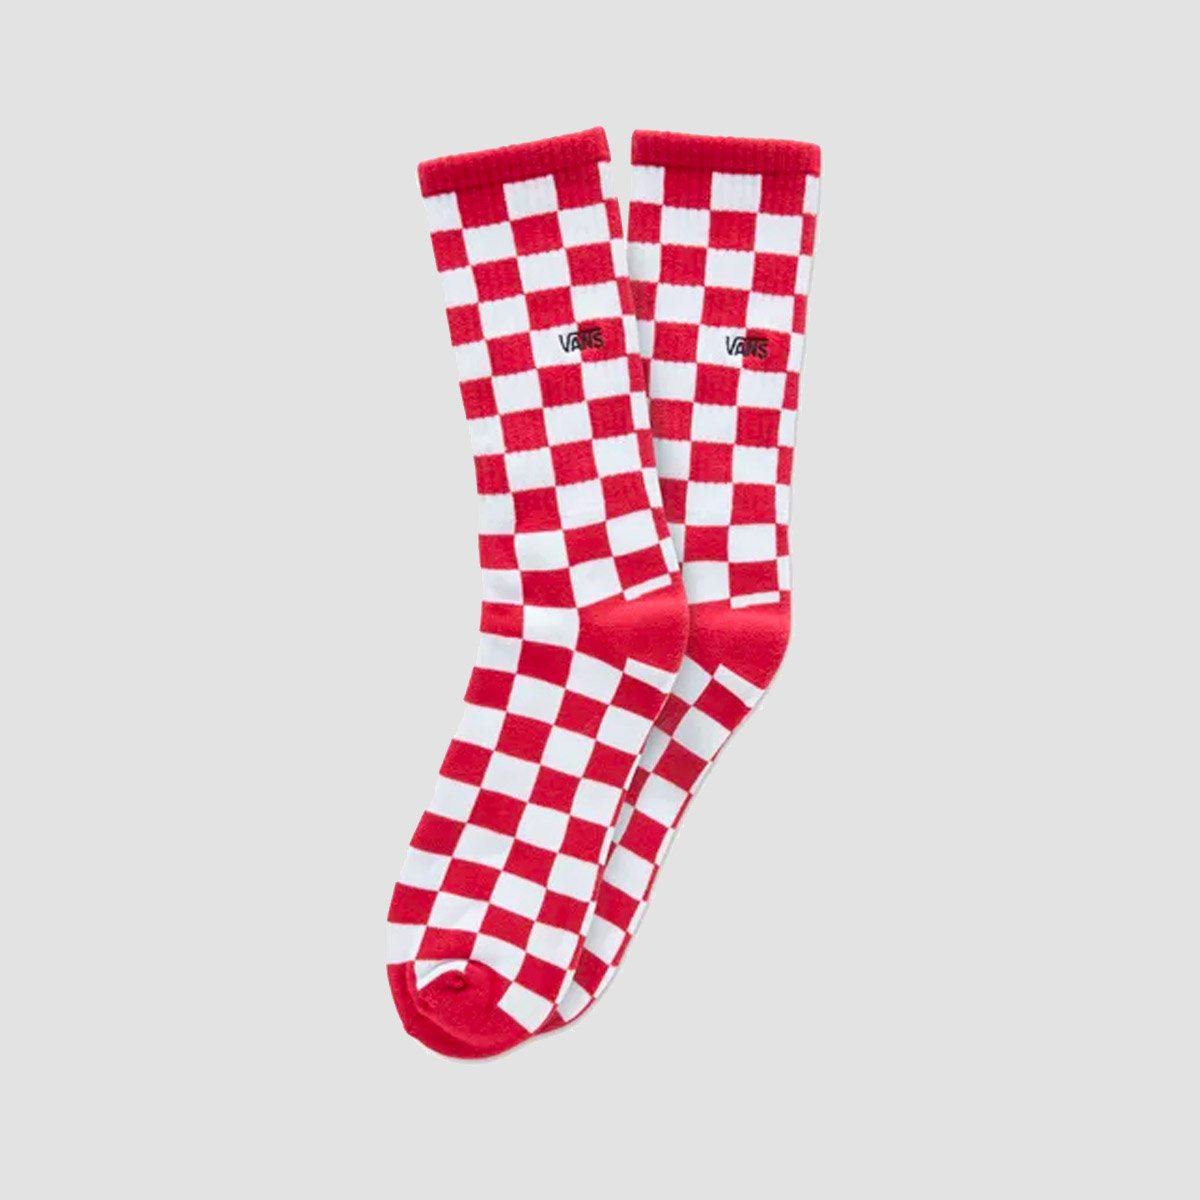 Vans Checkerboard II Crew Socks Red/White Check - Unisex